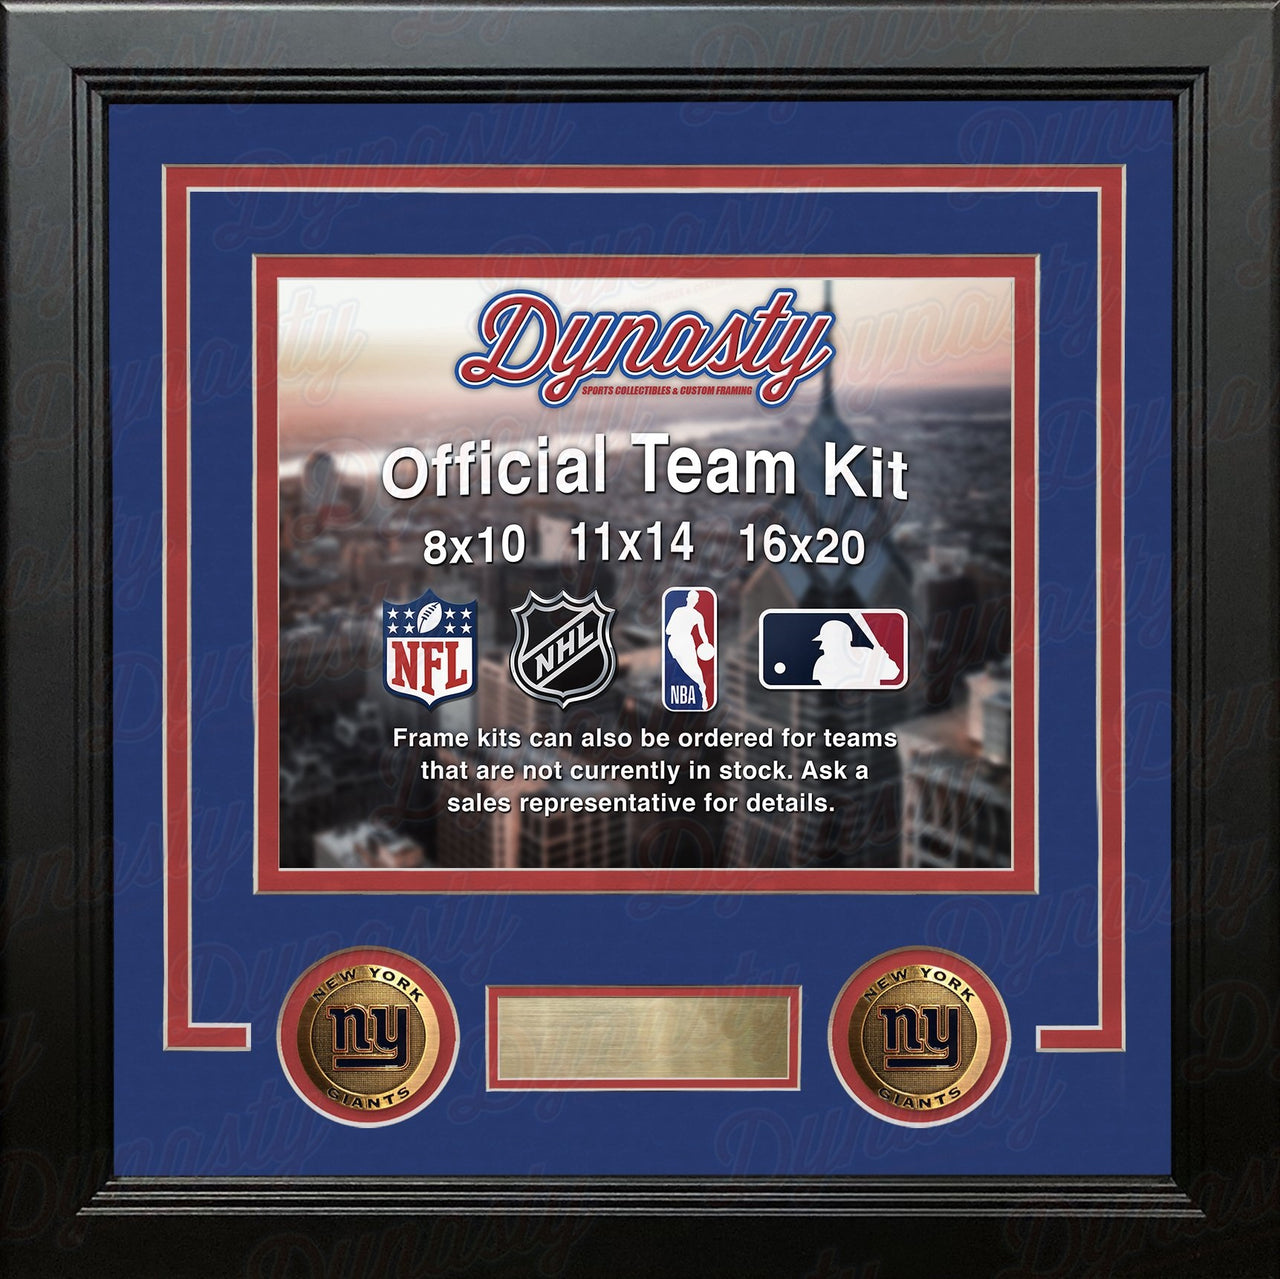 New York Giants Custom NFL Football 16x20 Picture Frame Kit (Multiple Colors) - Dynasty Sports & Framing 